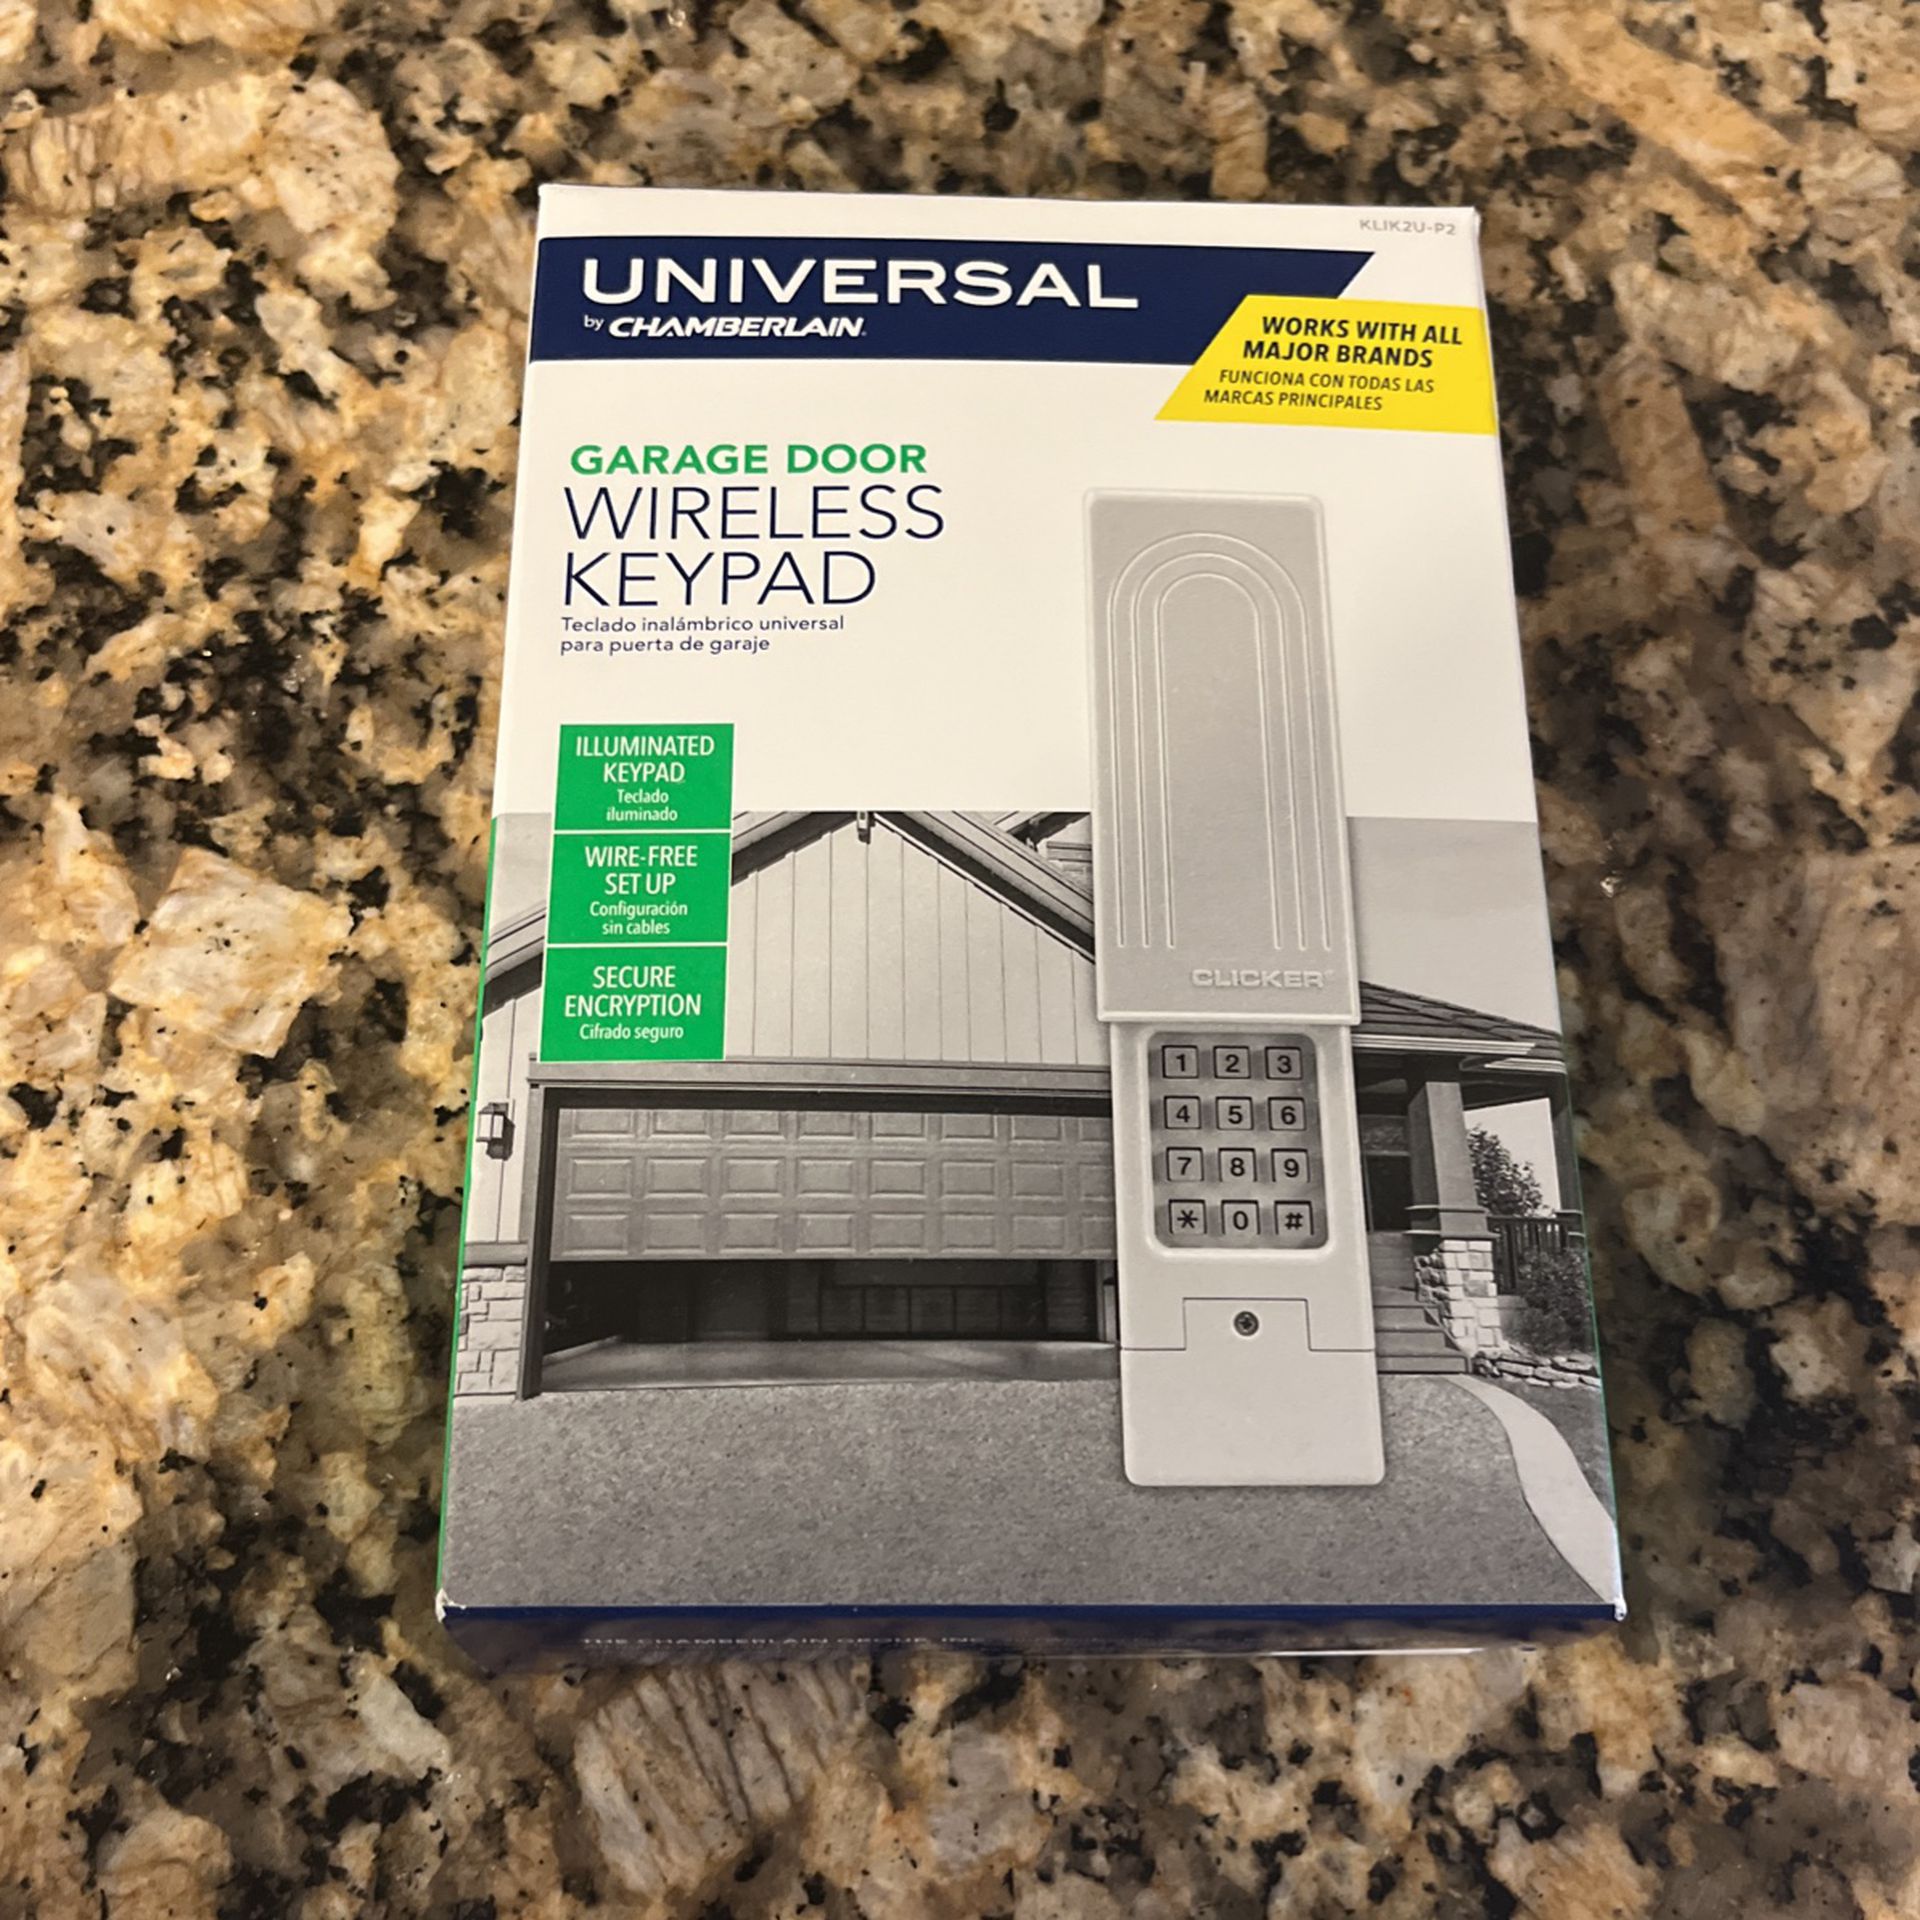 Universal Chamberlain Wireless Garage Door Keypad